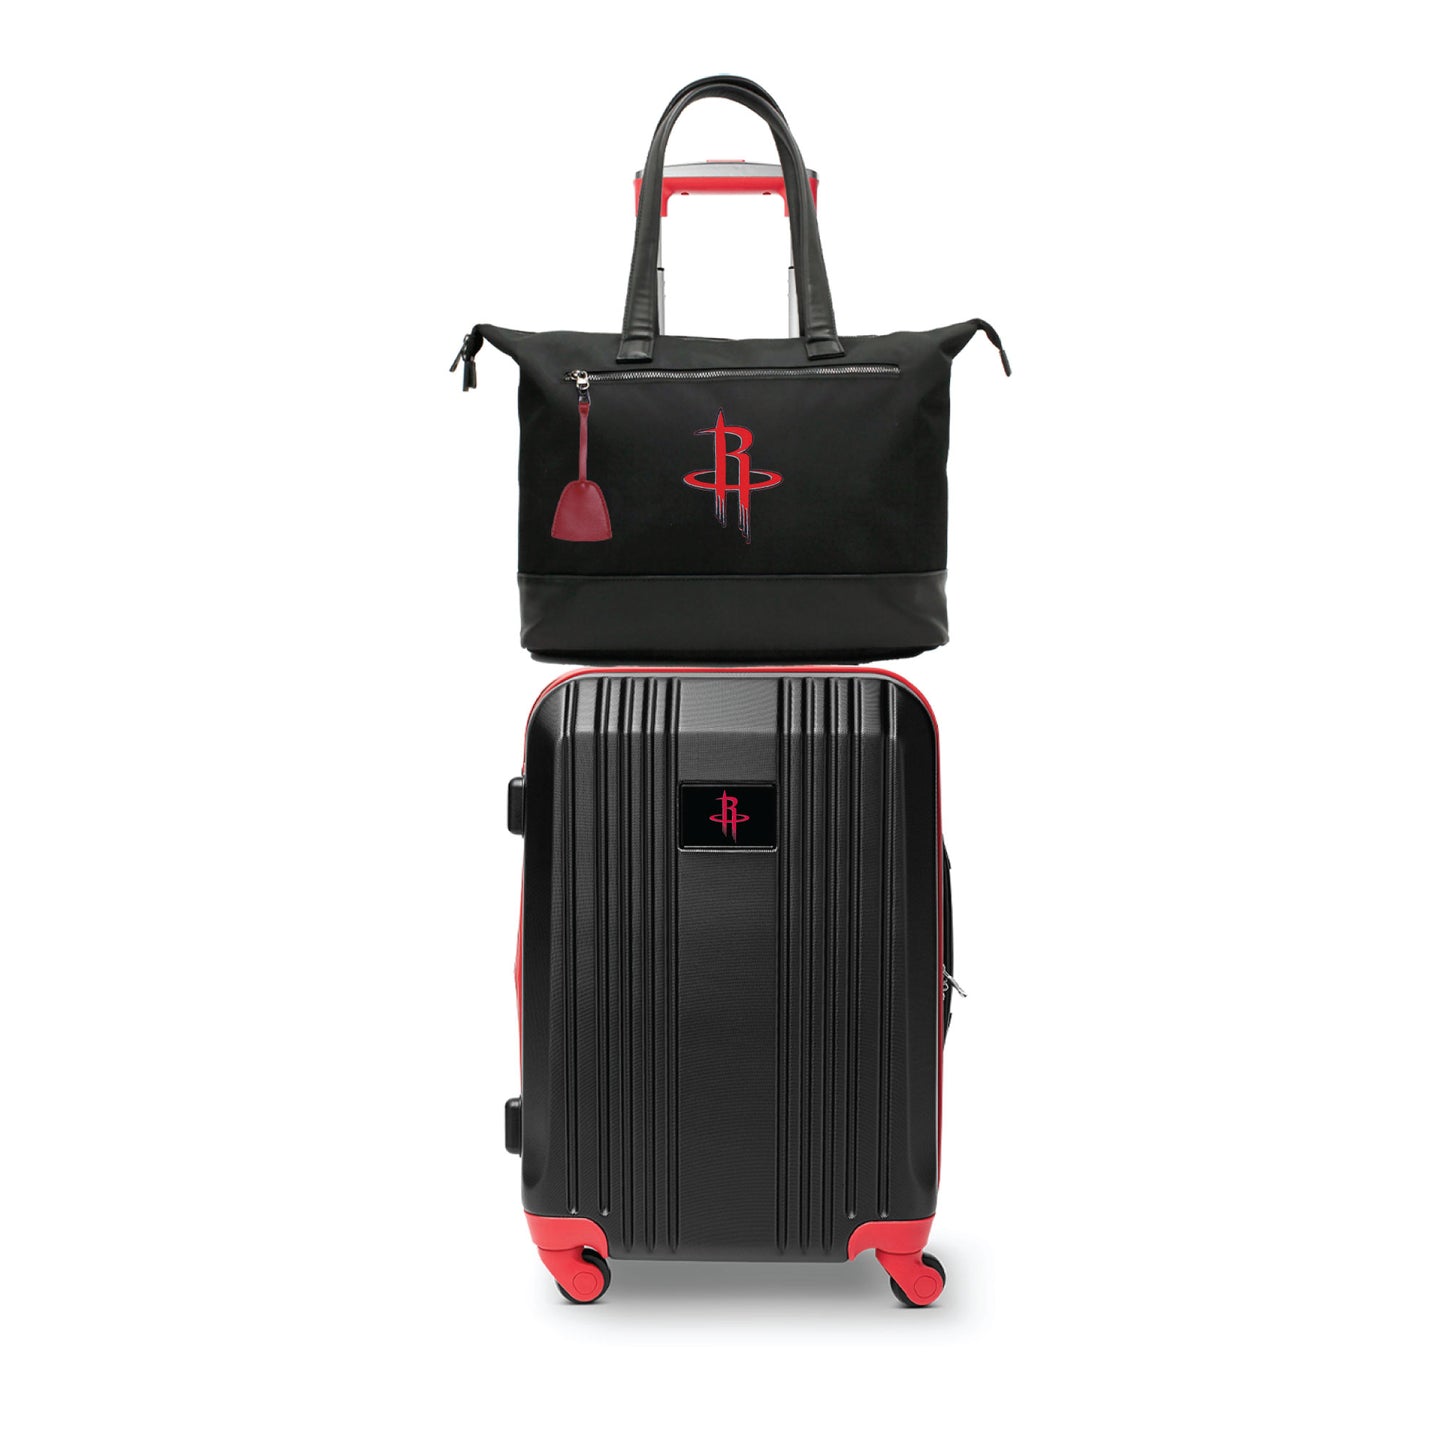 Houston Rockets Premium Laptop Tote Bag and Luggage Set